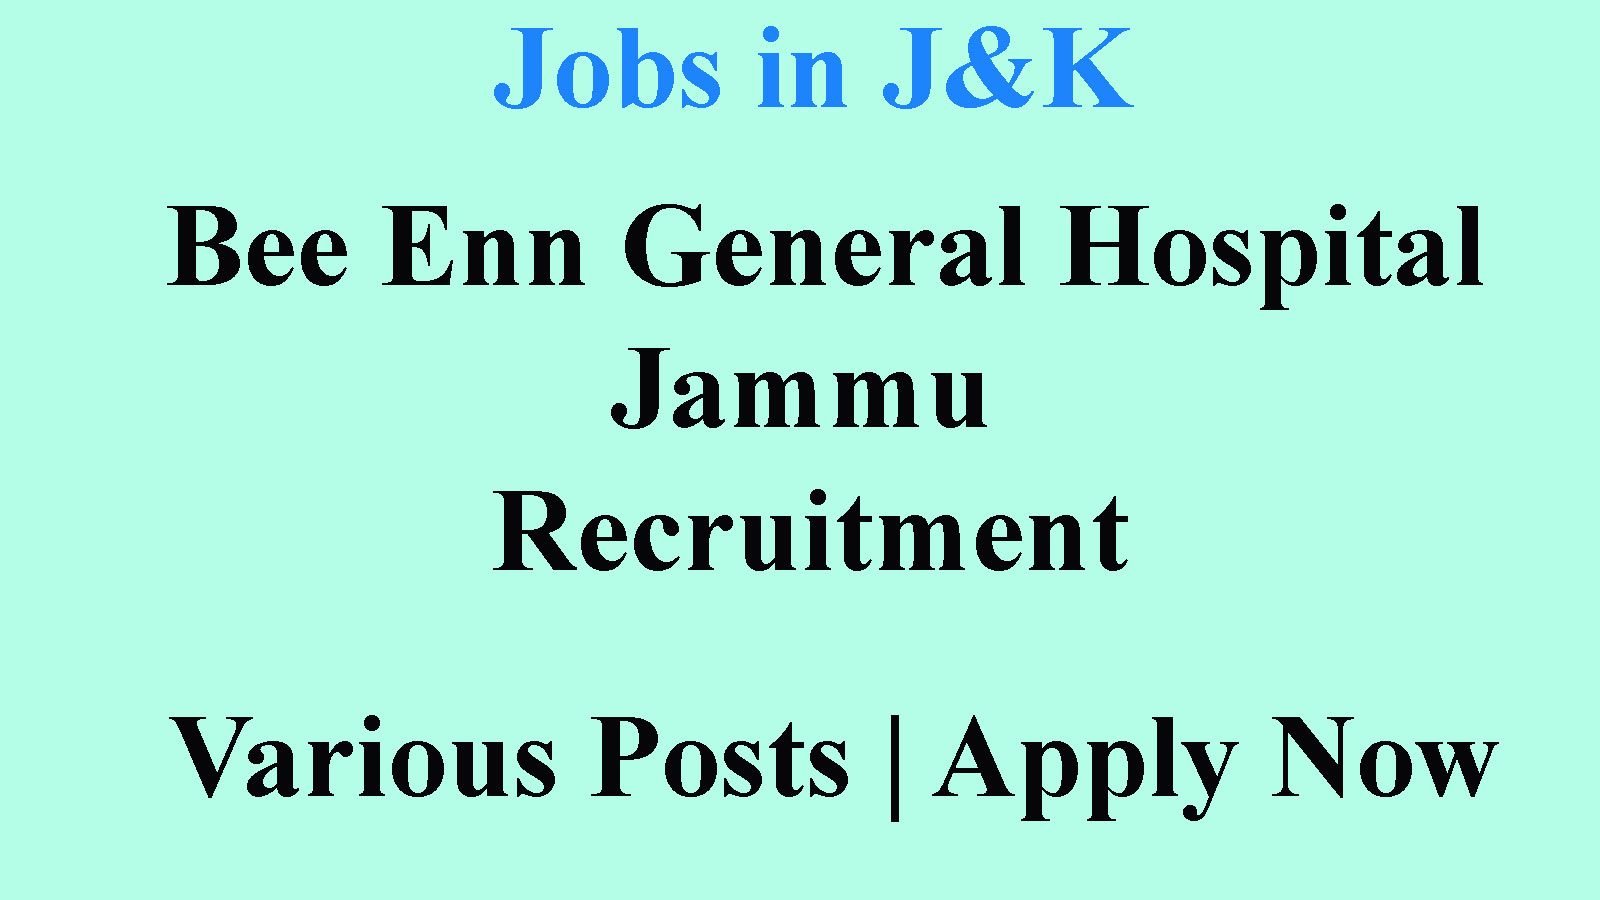 Bee Enn General Hospital Jammu Recruitment, Various Posts, Apply